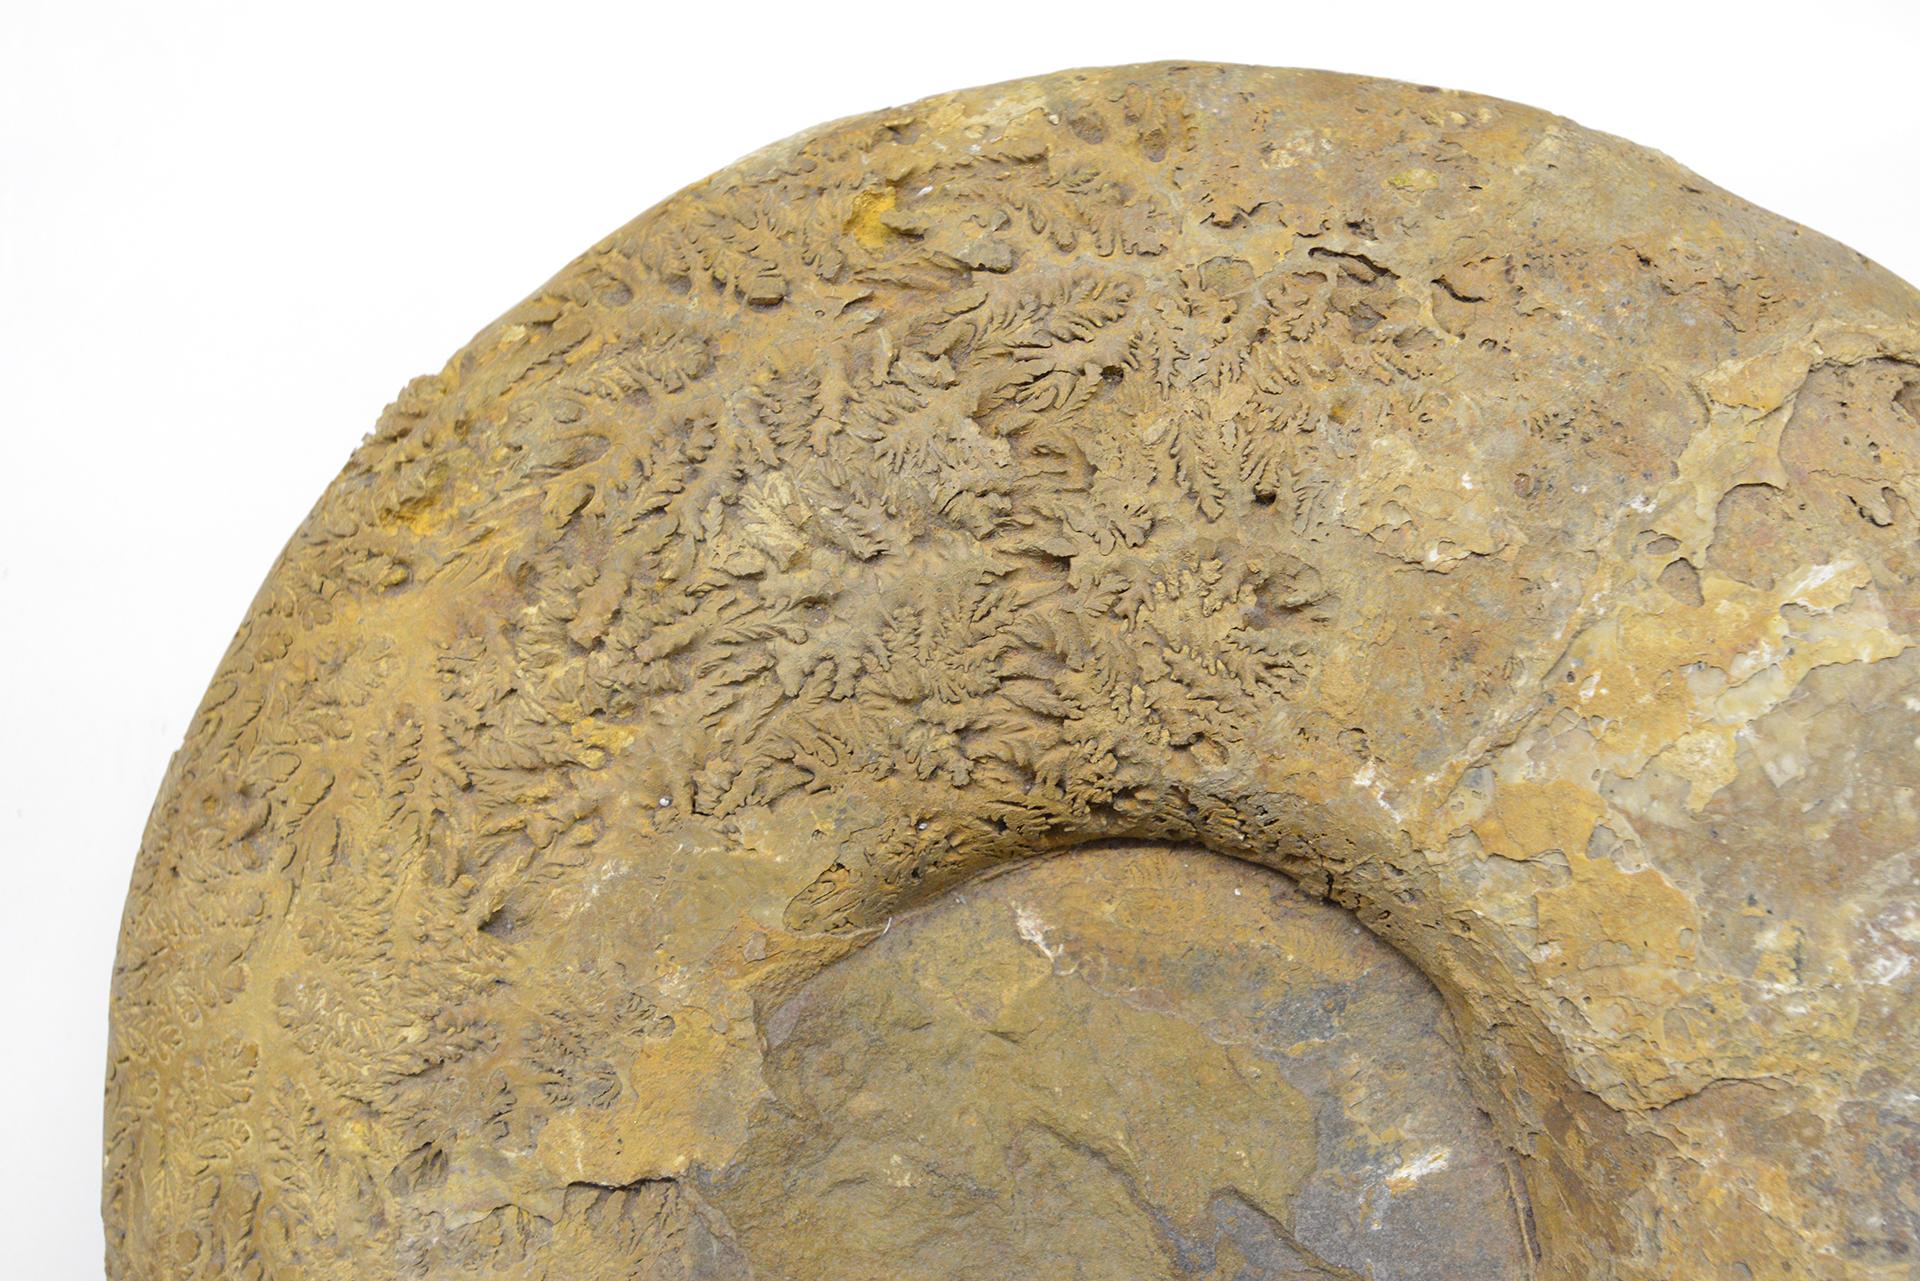 how big were ammonites